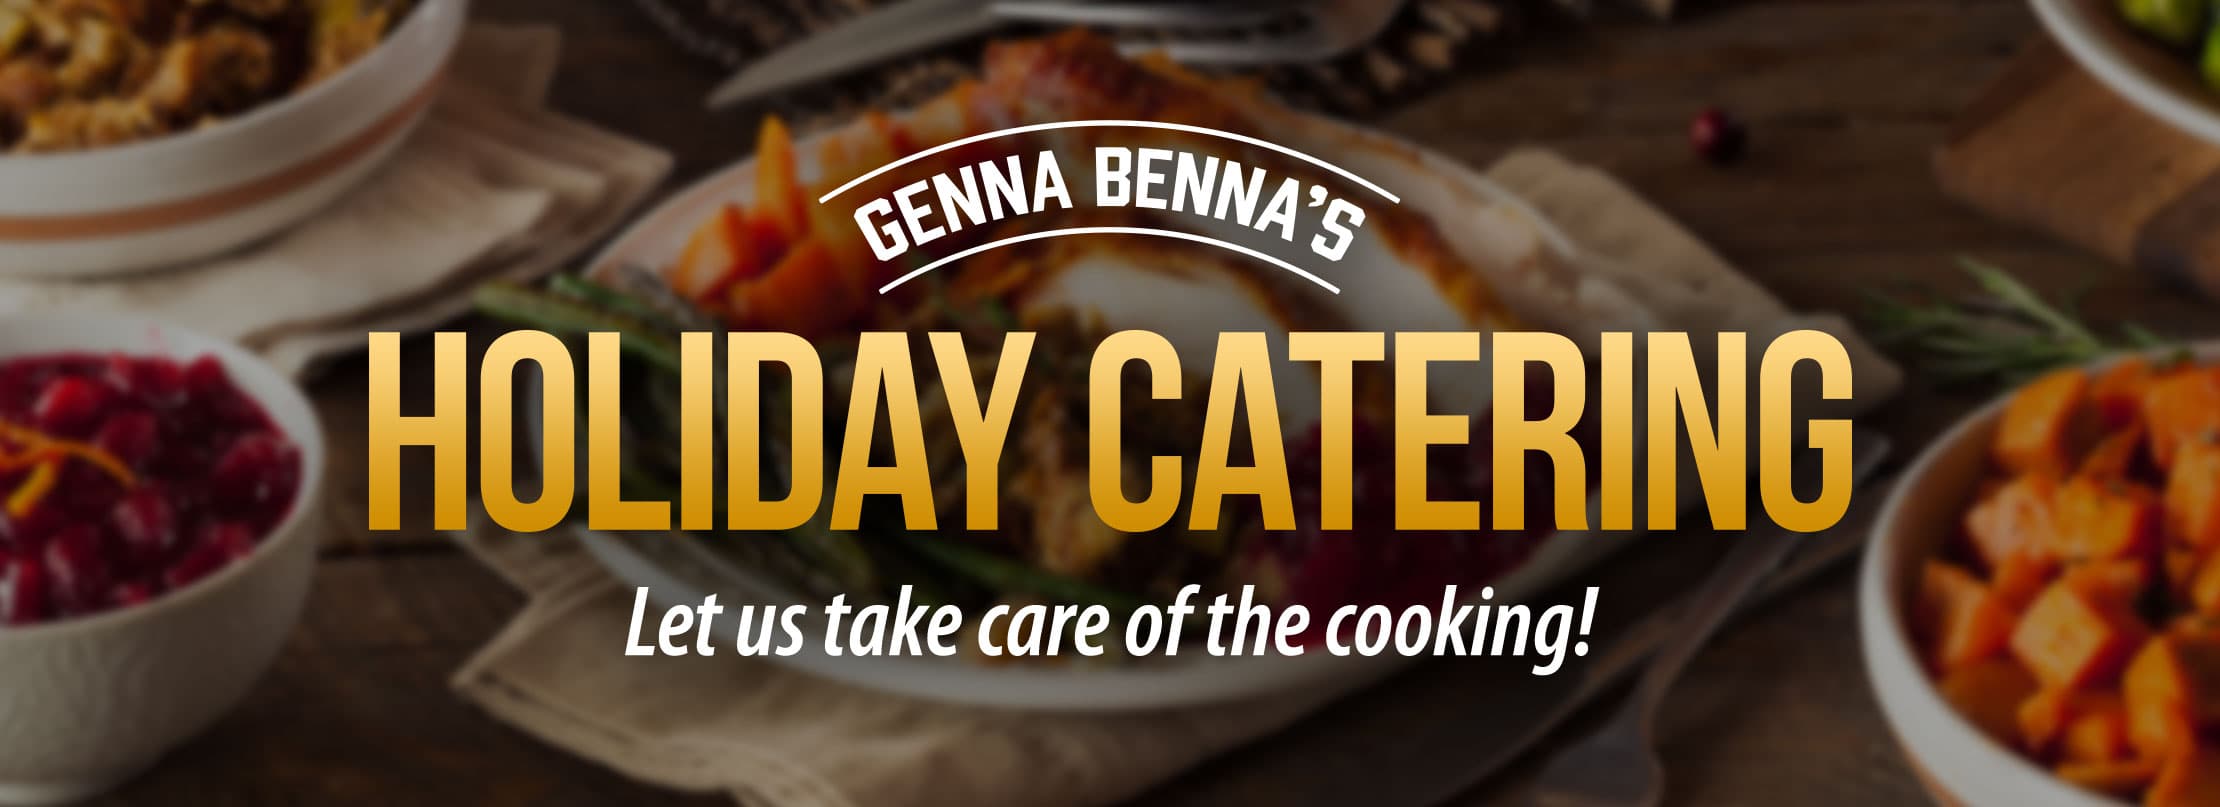 Genna Bennas Holiday Catering